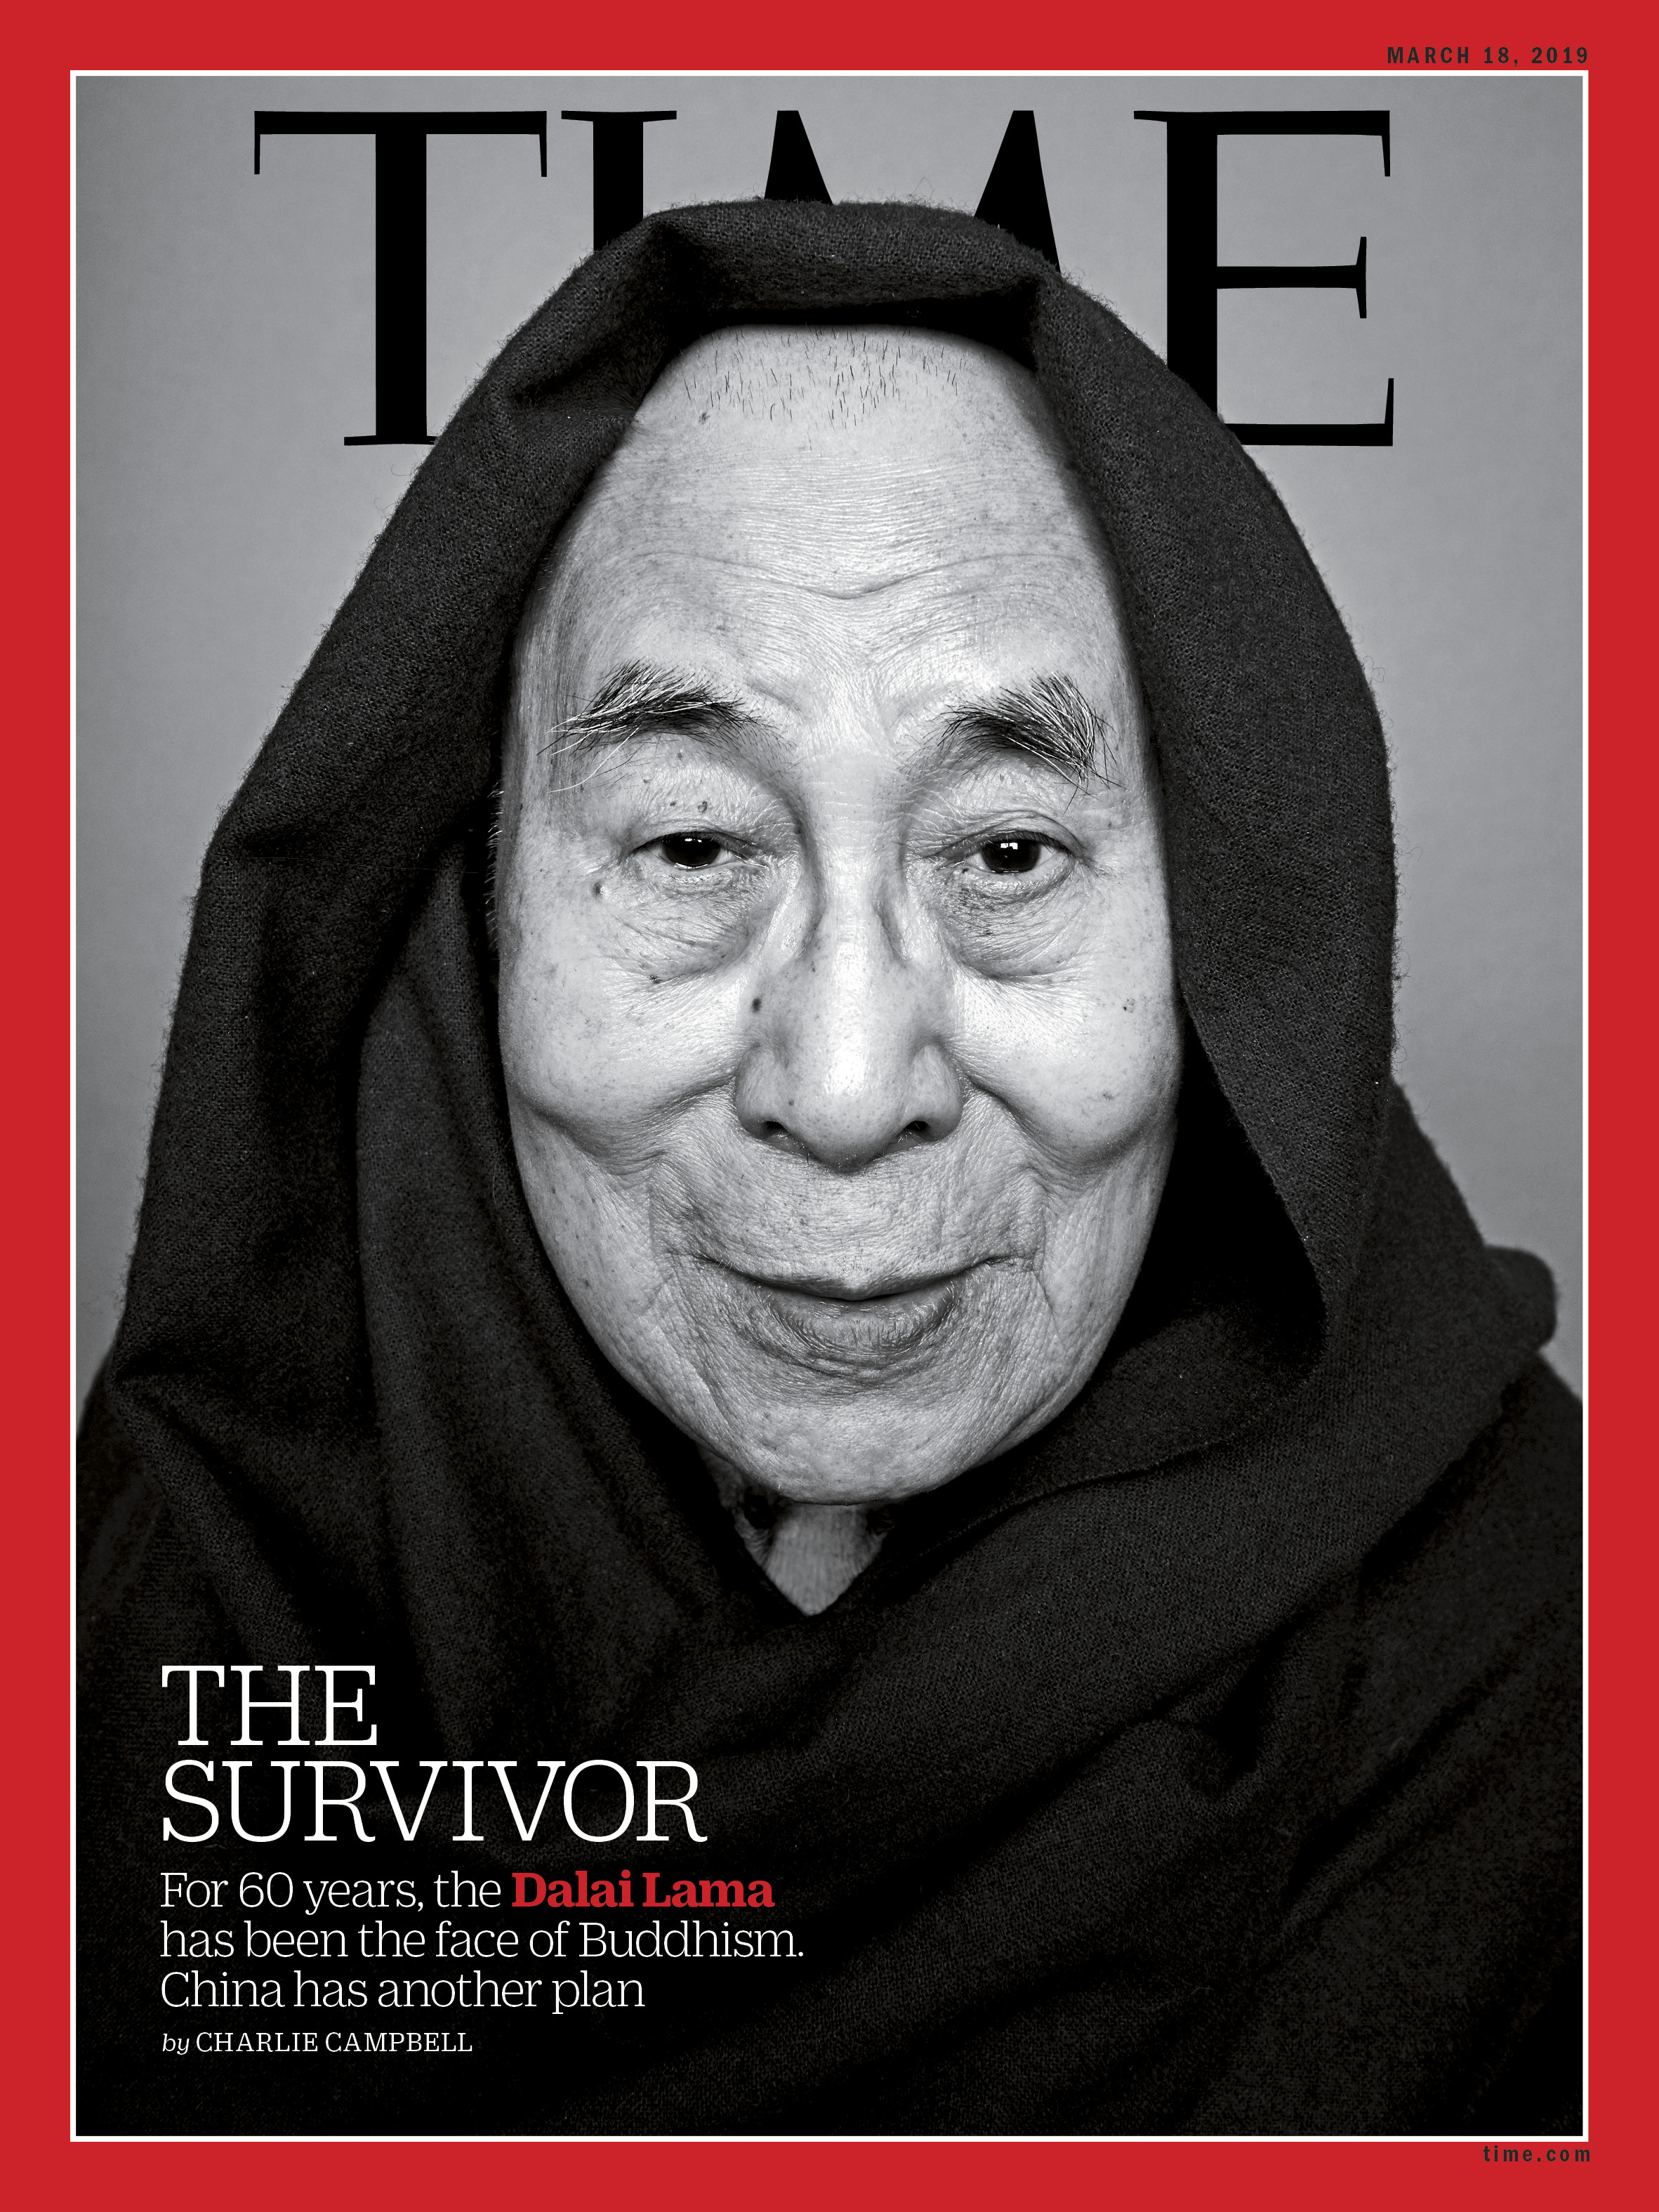 The Survivor Dalai Lama Time Magazine Cover 190318